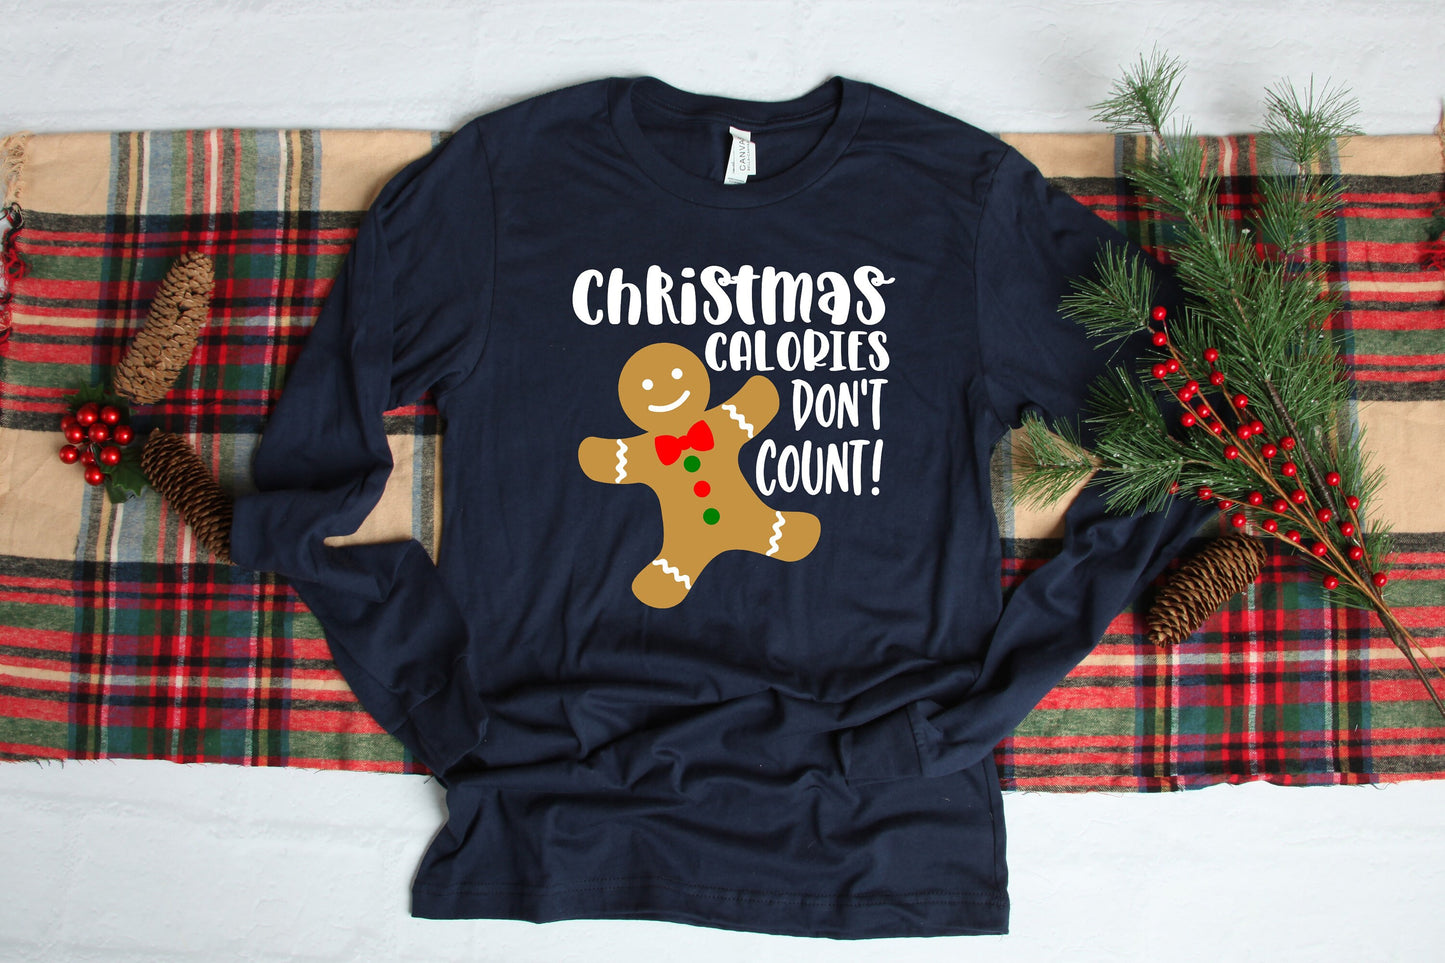 Christmas Calories Don't Count Women's Crewneck Longsleeved T-Shirt -  Christmas Party Shirt - Gingerbread Man Shirt - Funny Christmas Shirt